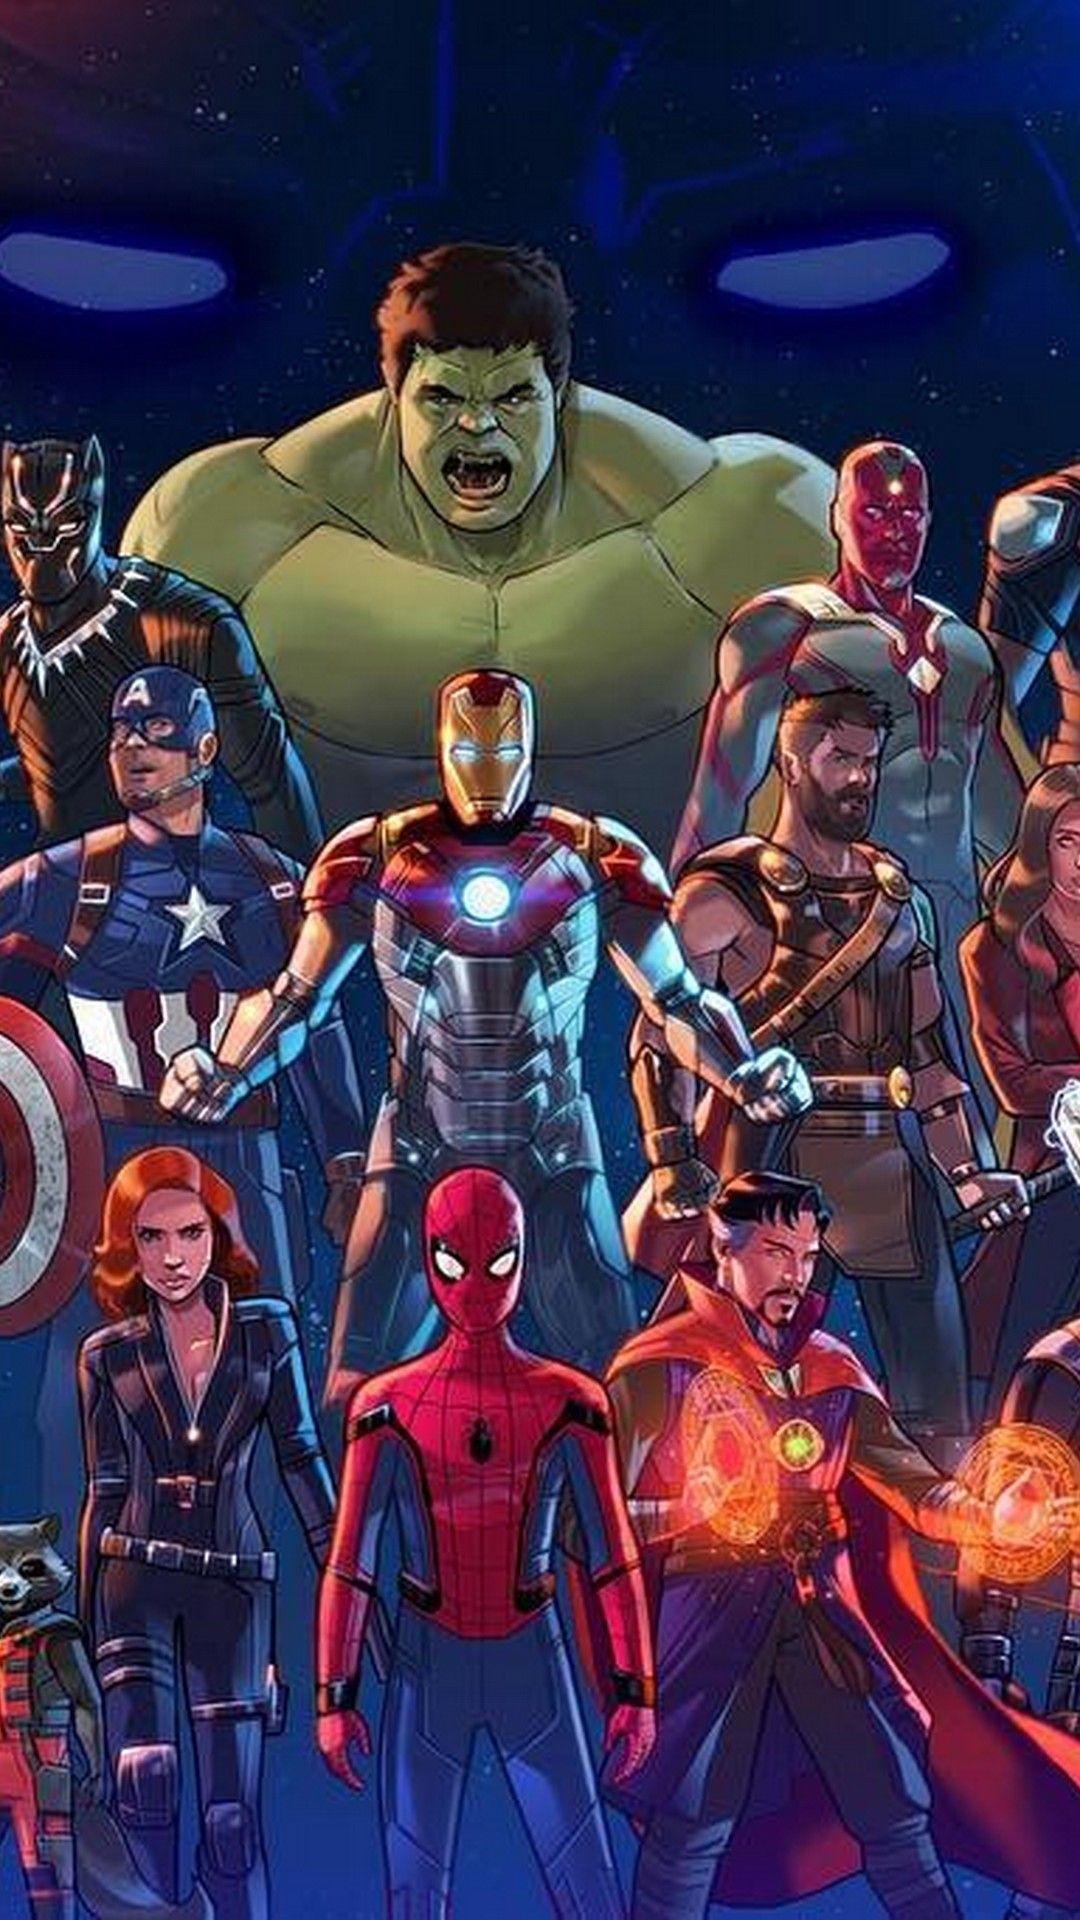 Wallpaper Android Avengers Infinity War - 2019 fondos de pantalla de Android